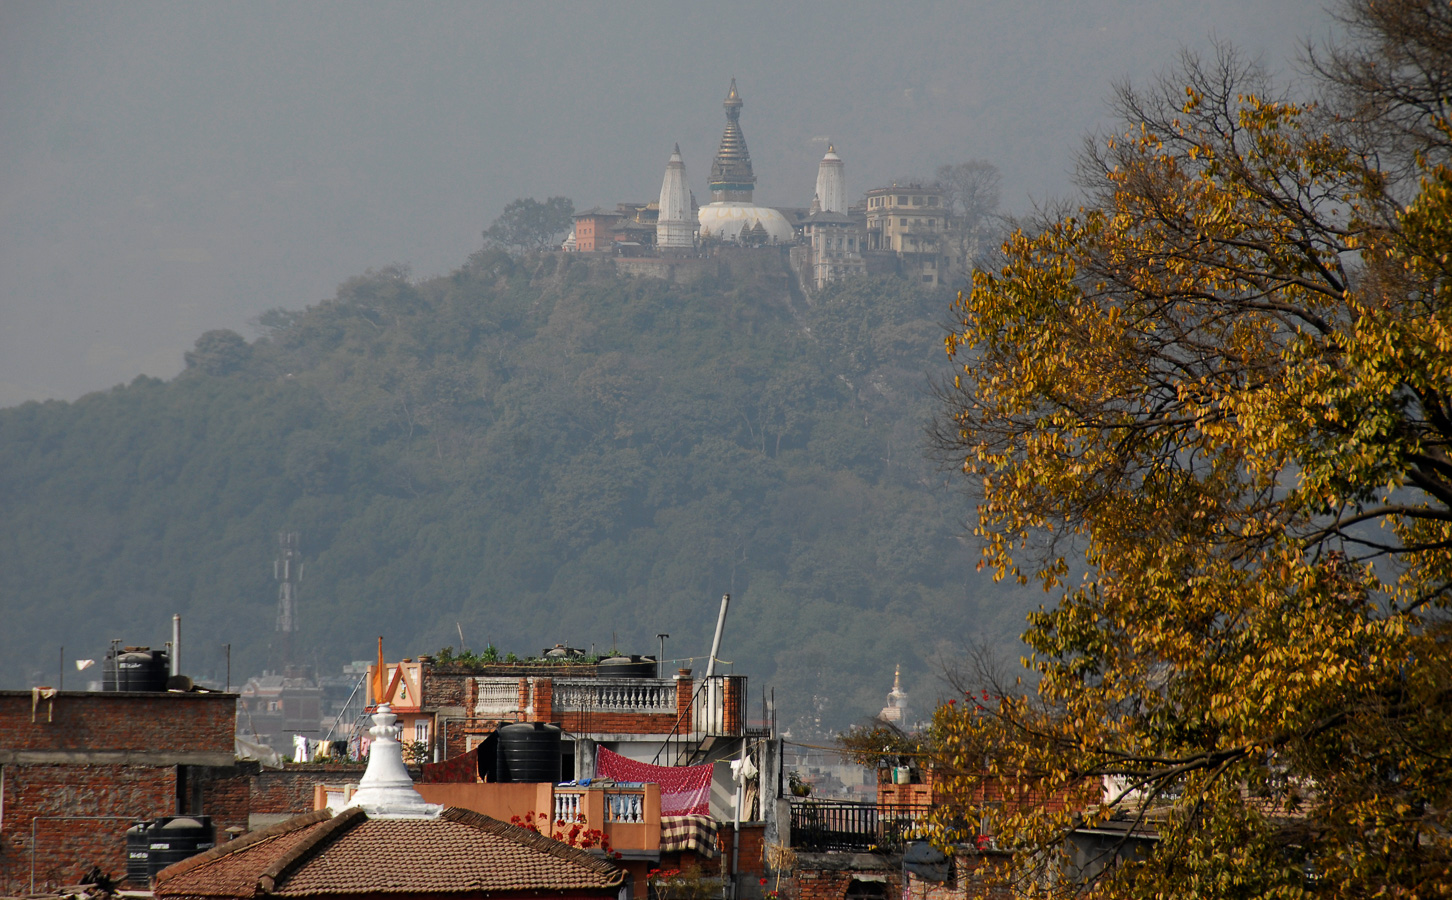 Kathmandu [200 mm, 1/320 sec at f / 9.0, ISO 200]